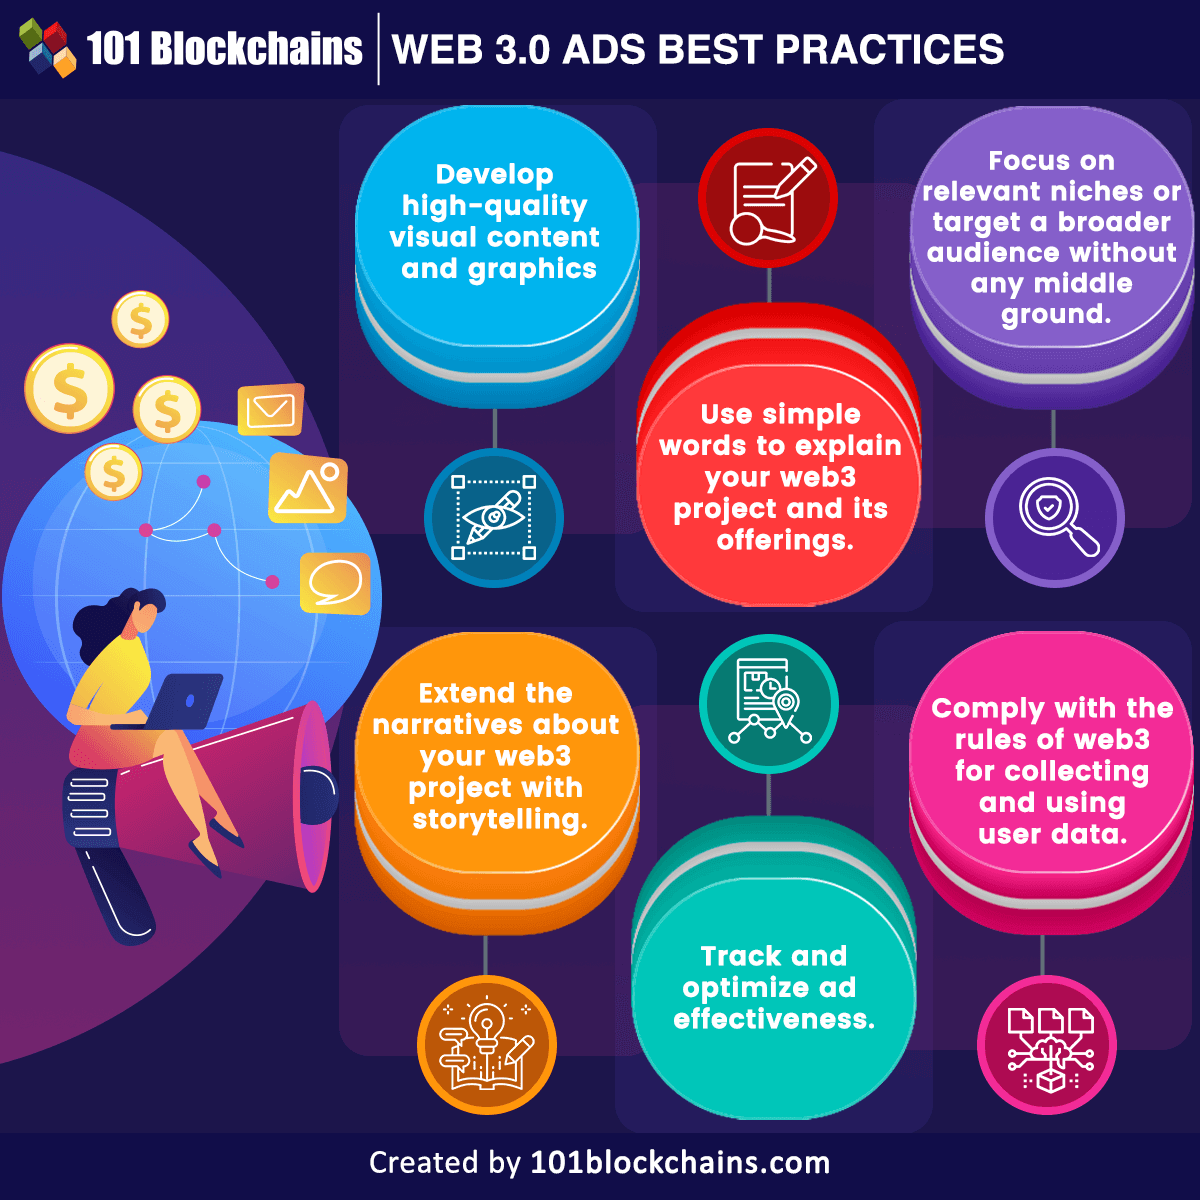 Web 3.0 Ads Best Practices